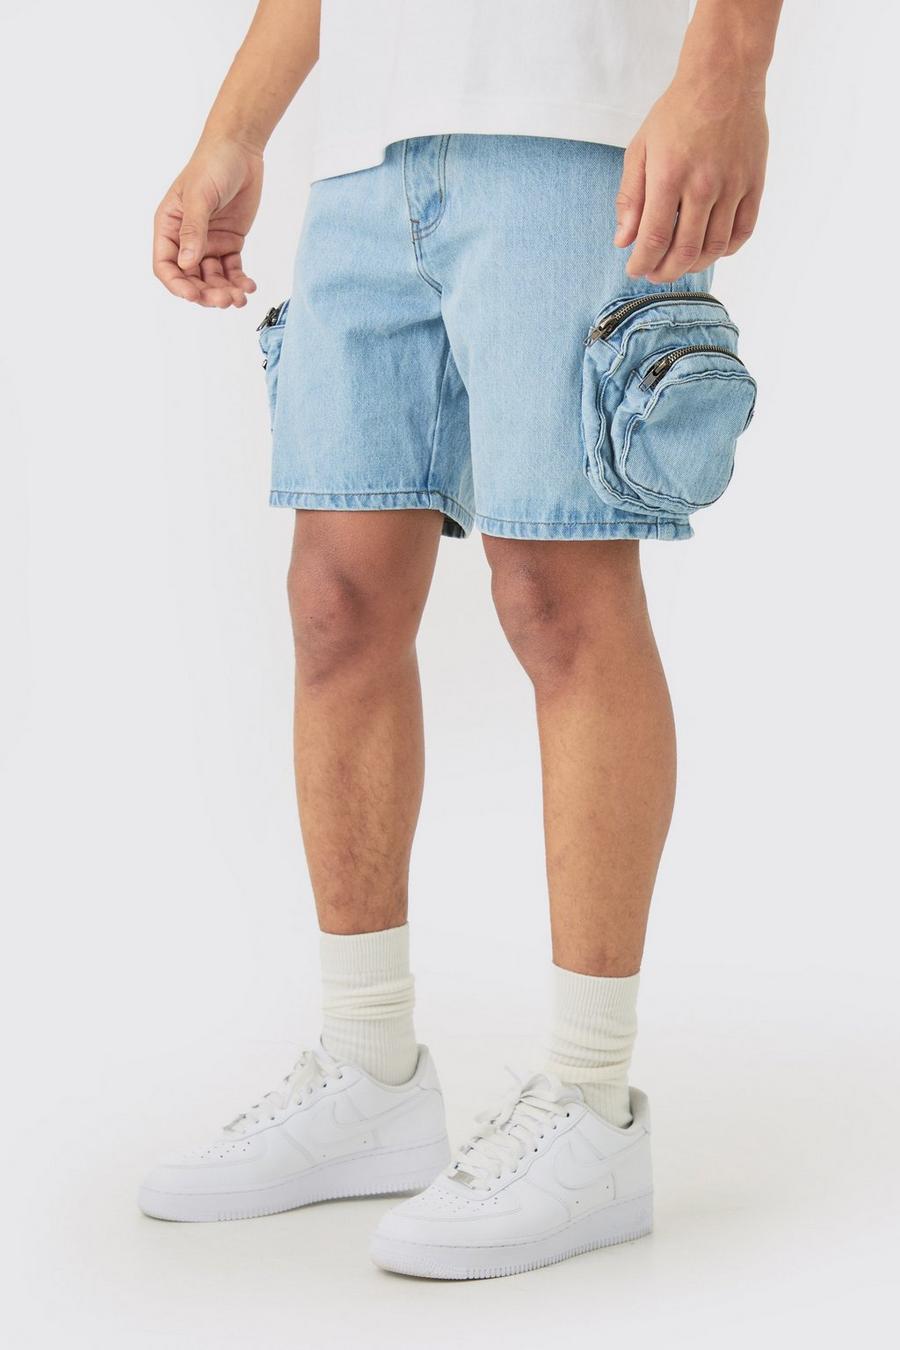 Pantalones cortos vaqueros ajustados con bolsillos cargo 3D en azul claro, Light blue